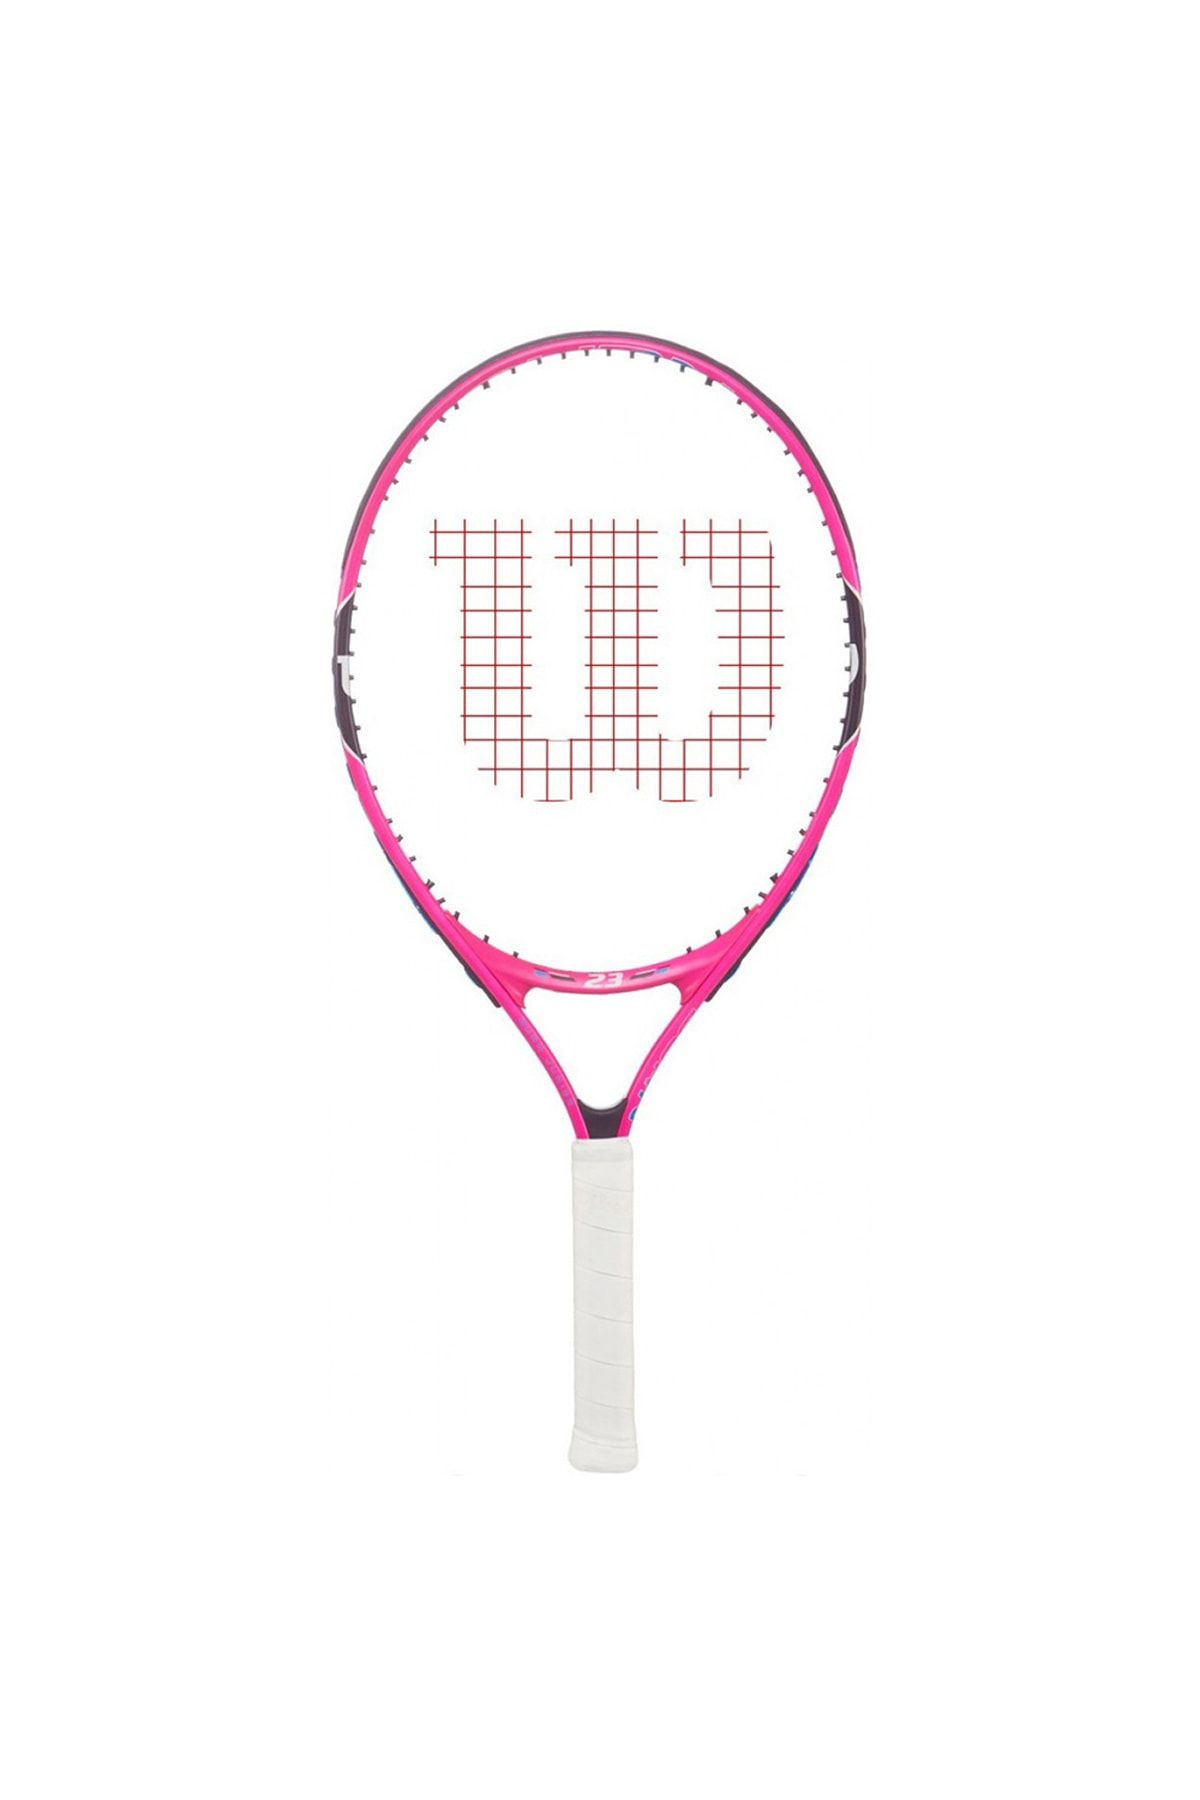 Wilson Tenis Raketi Burn Pink 23 Genç (WRT218100)